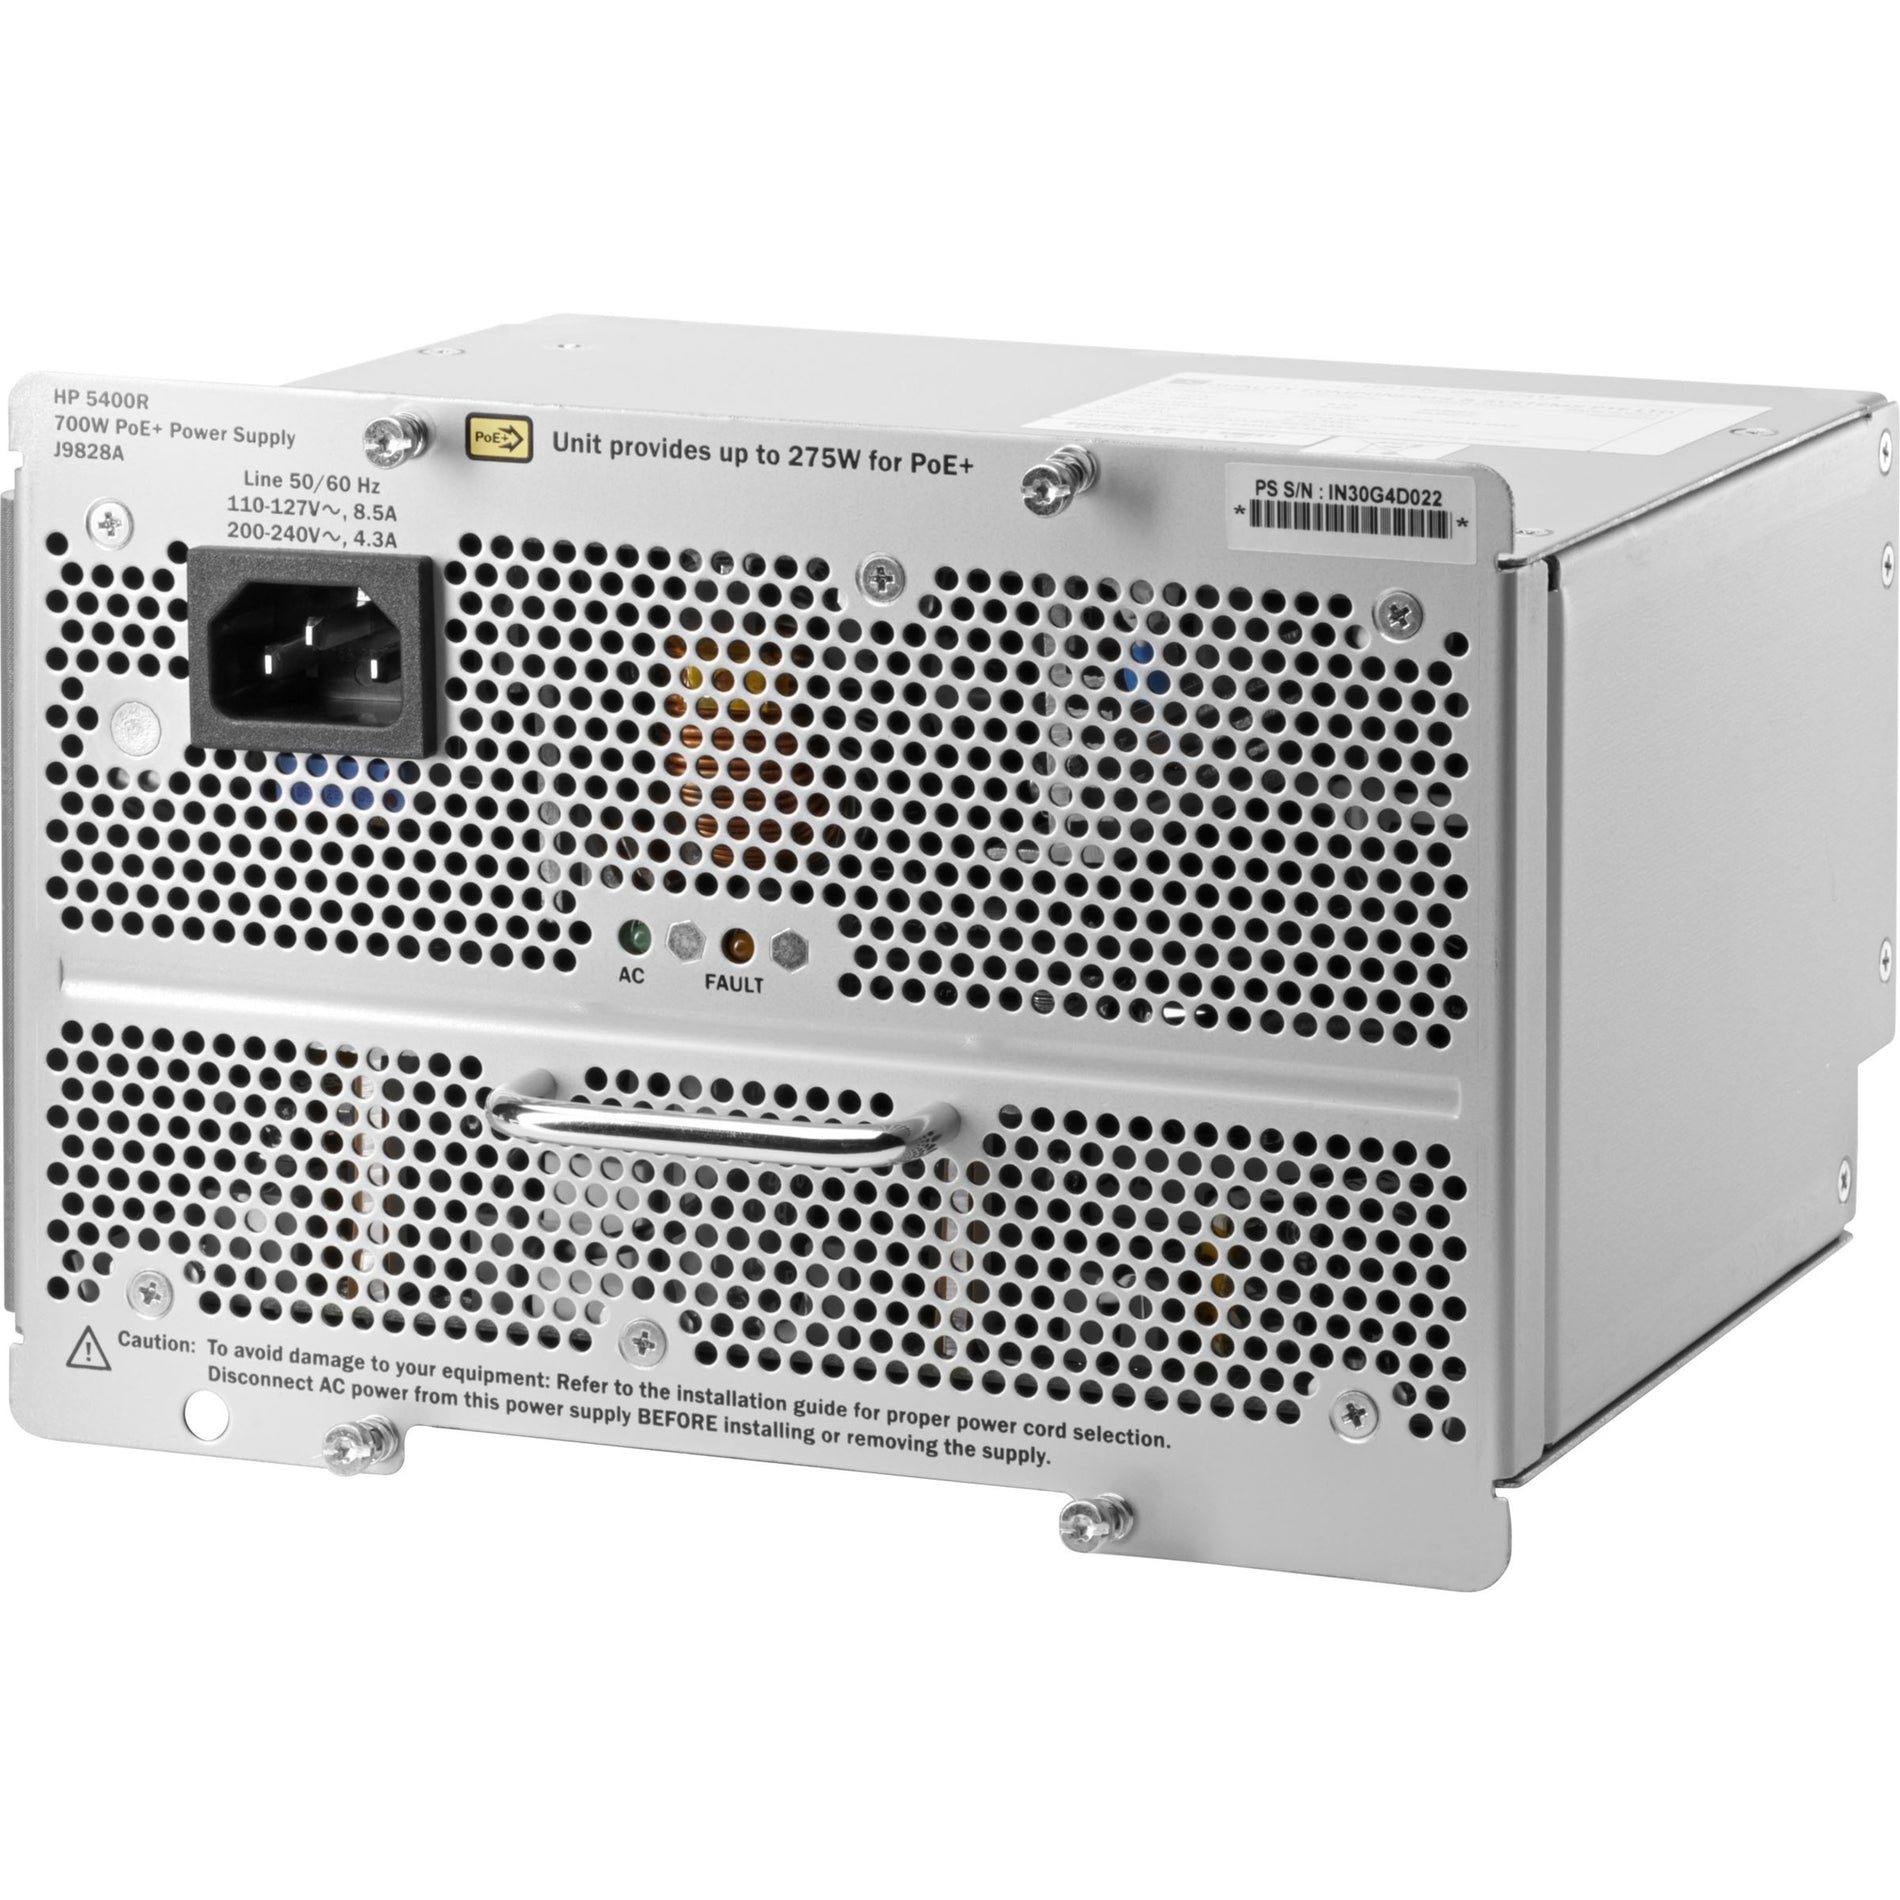 HPE E 5400R 700W PoE+ zl2 Power Supply (J9828A)